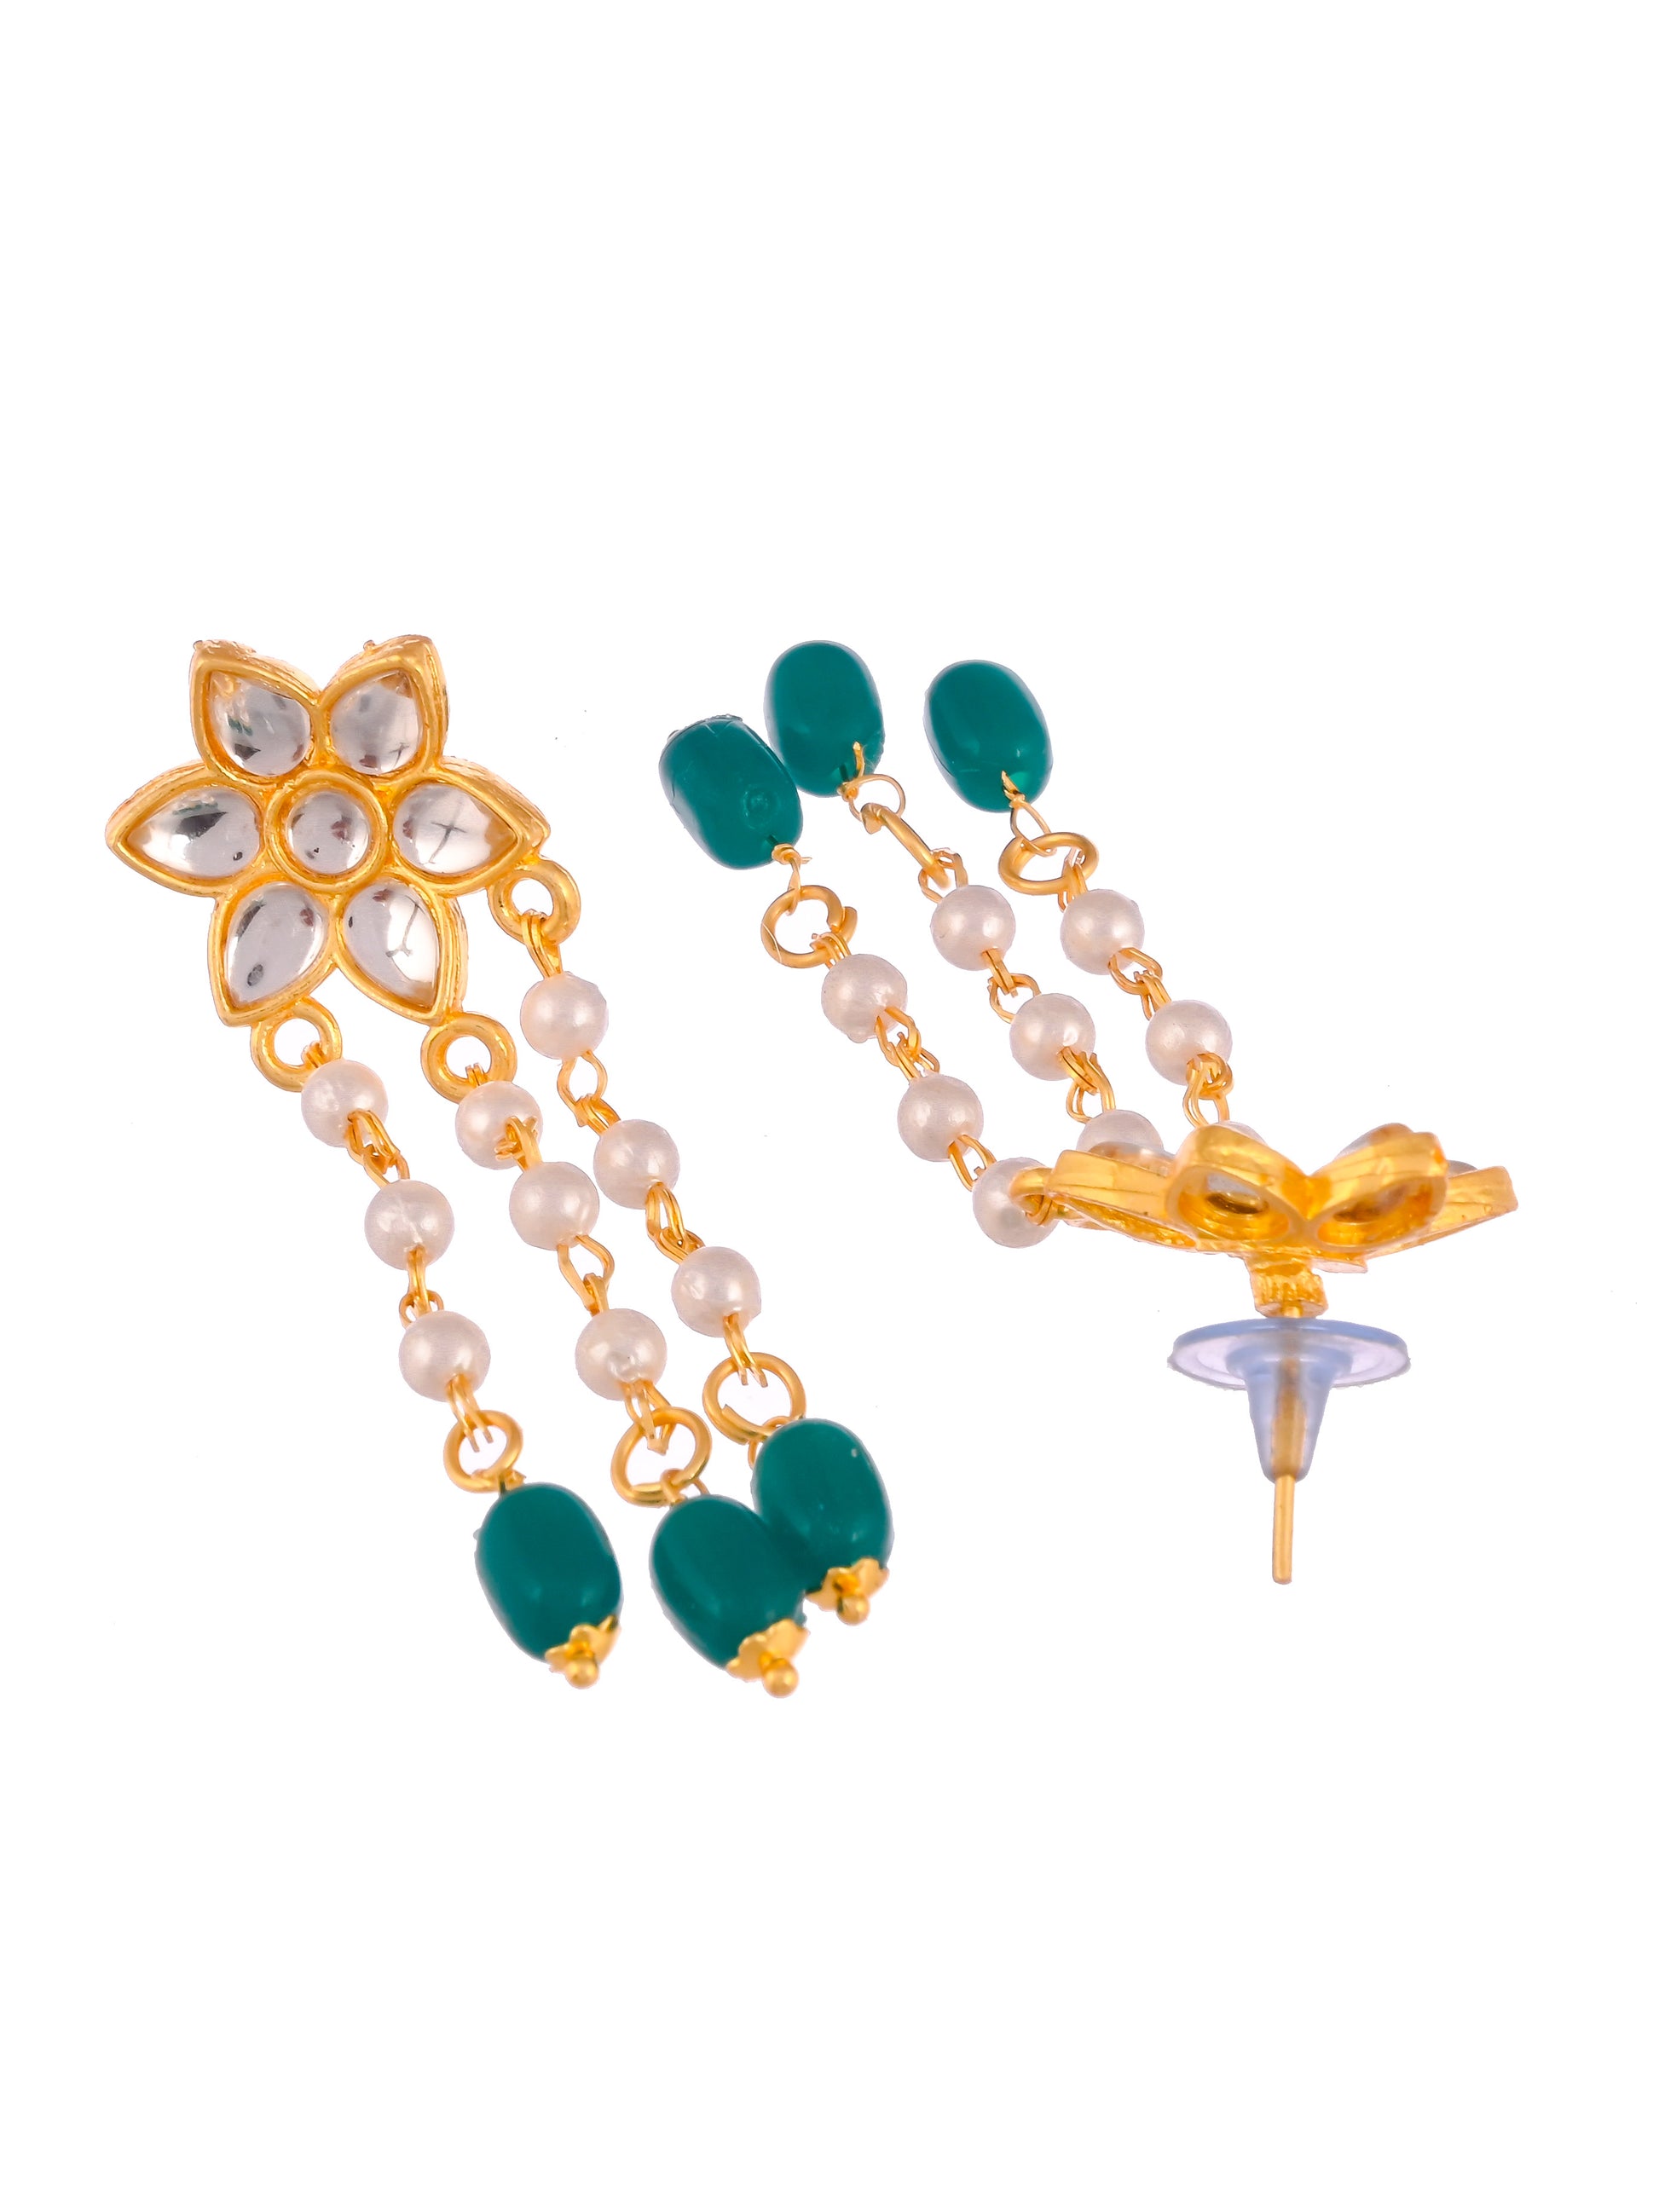 Women Gold Plated Kundan Beaded Long Necklace Jewellery Set